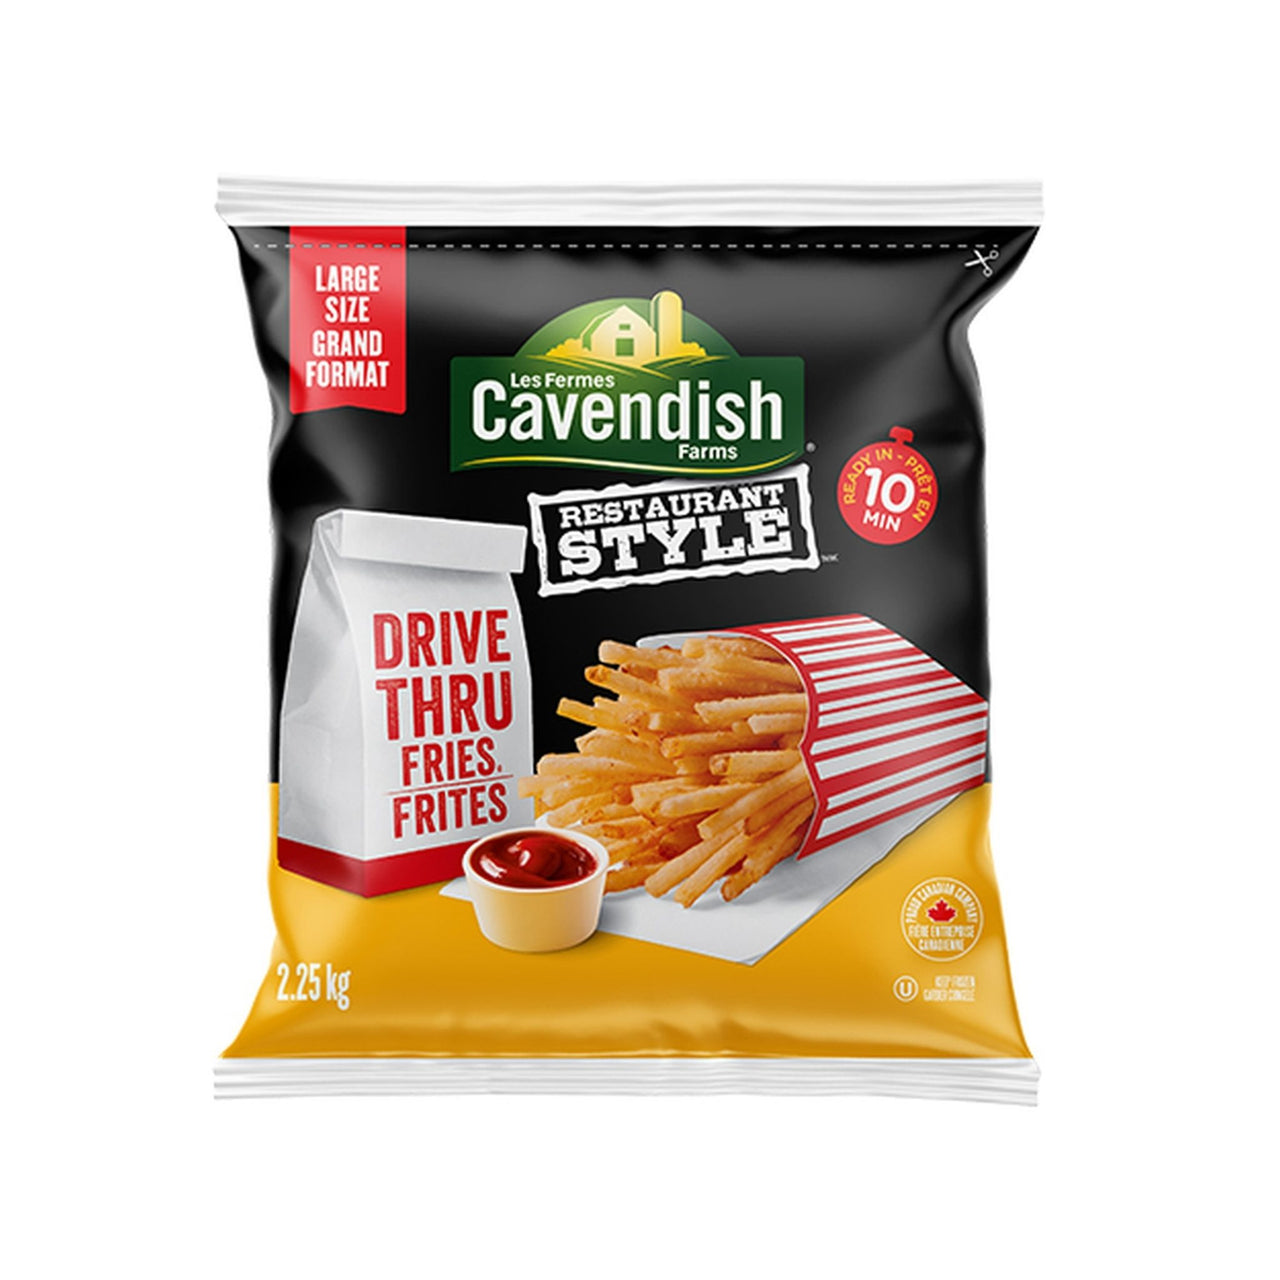 Image of Cavendish Farms Restaurant Style Drive Thru Fries 2.25kg